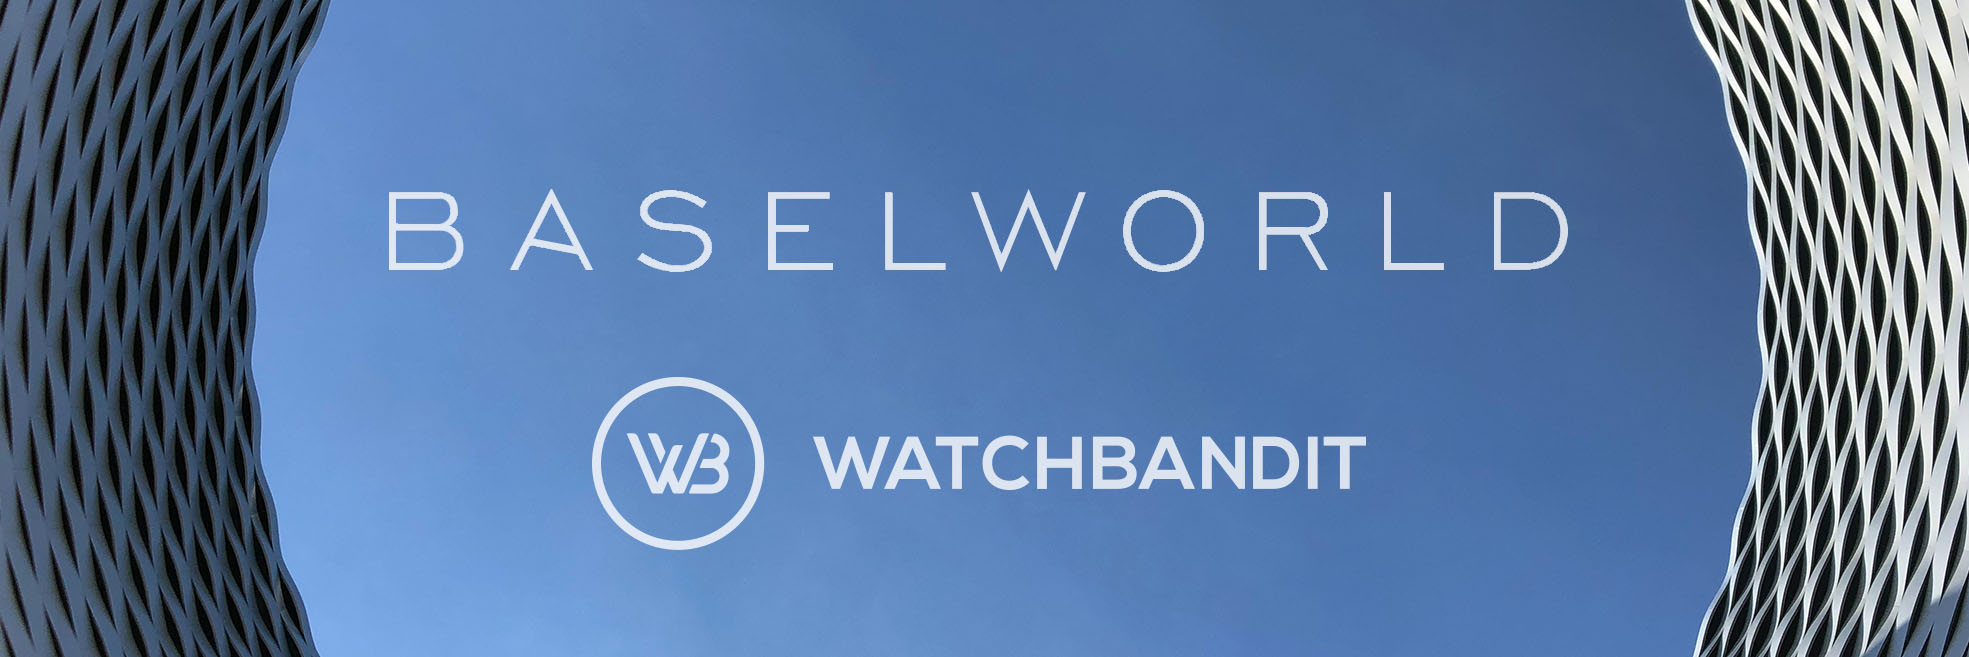 Baselworld_WatchBadnit_Logo